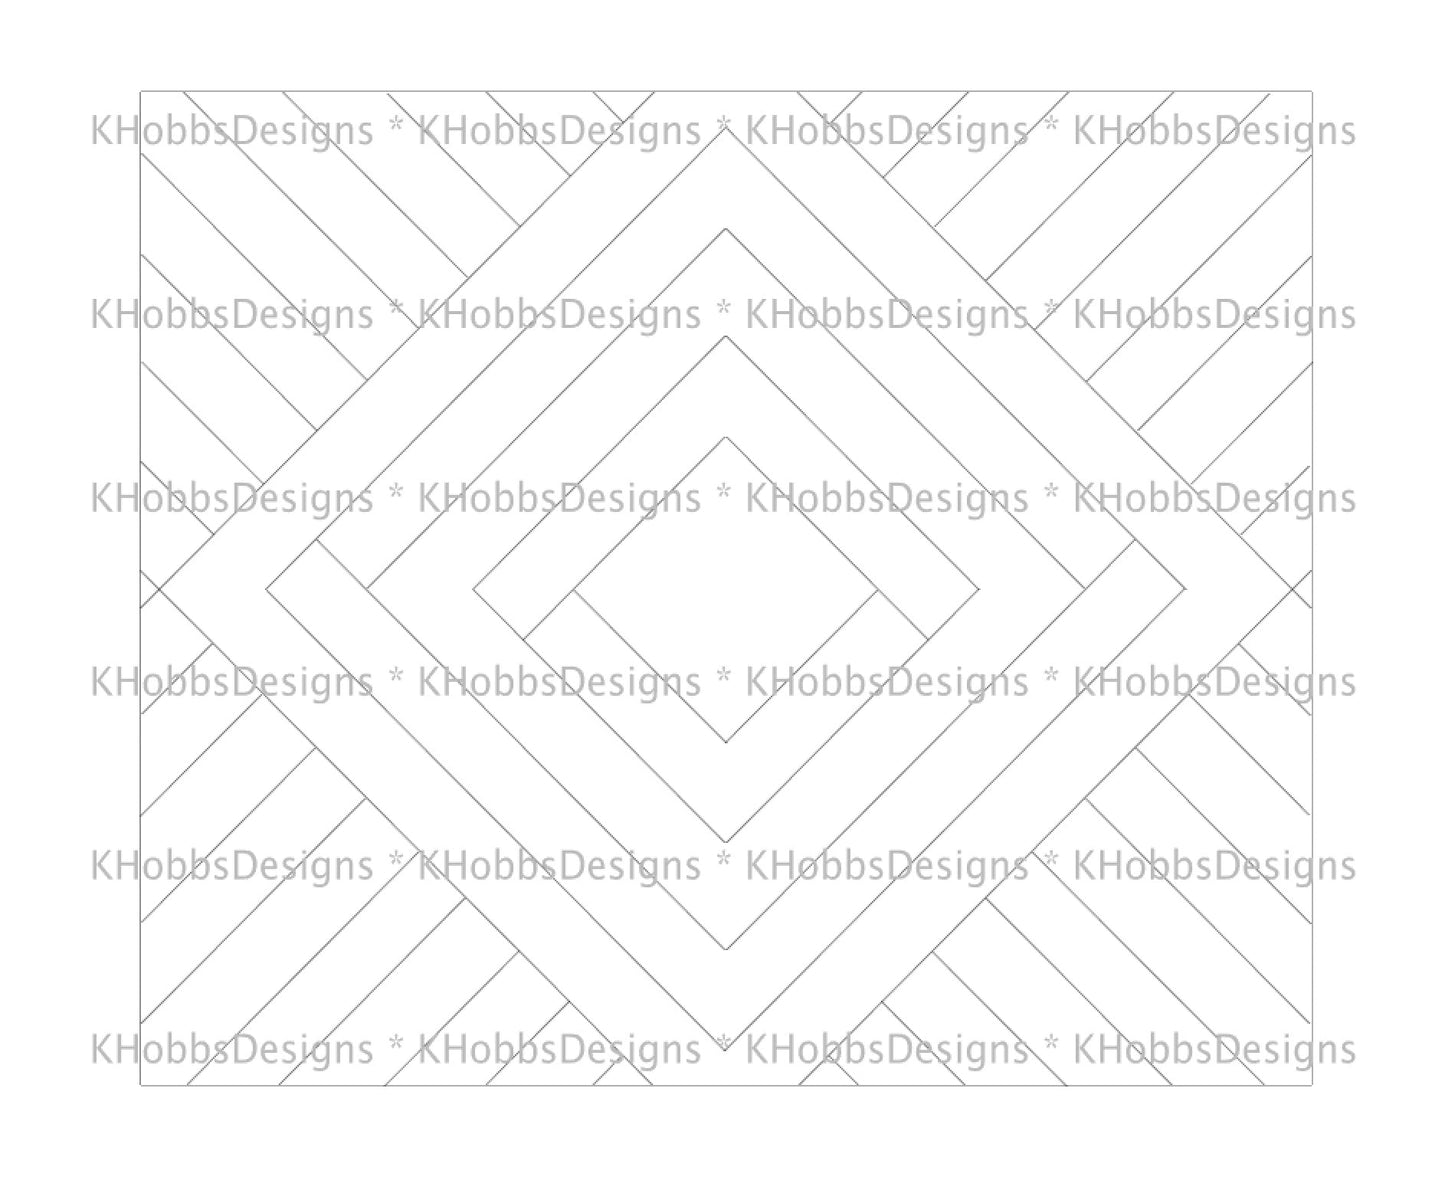 Prism Striped Template for Makerflo 20oz Skinny - Digital Cut File Only